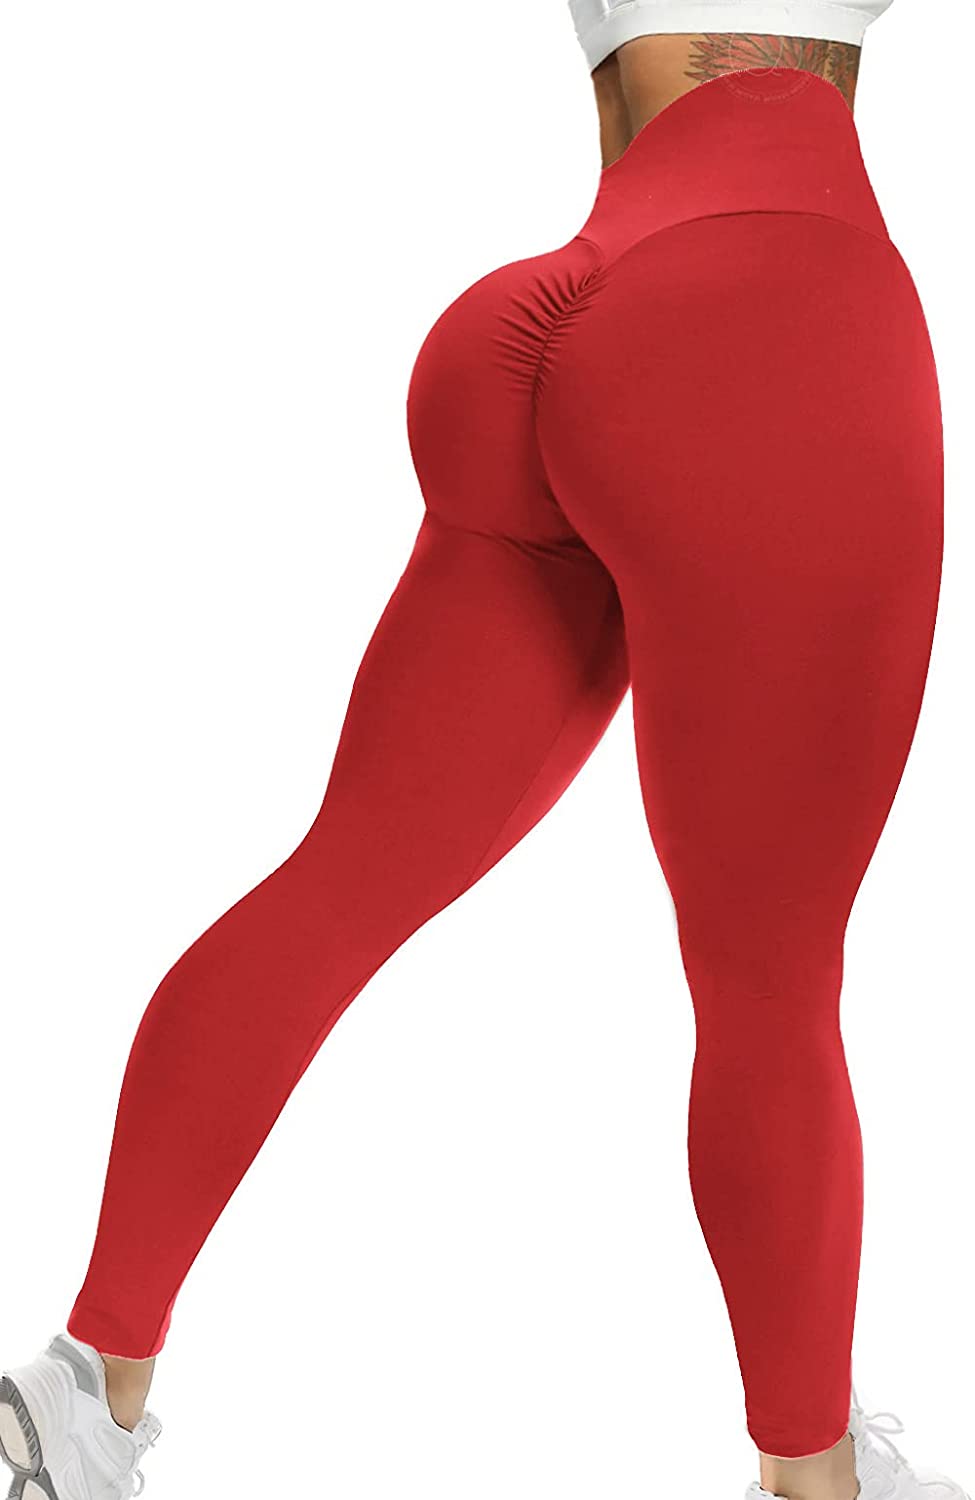 SEASUM Women's High Waisted Workout Yoga Butt Lifting Scrunch Booty Tummy  Control Anti Cellulite Textured Pants, #1 U-capris Grey, Large, #1 U-capris  Grey, L price in UAE,  UAE